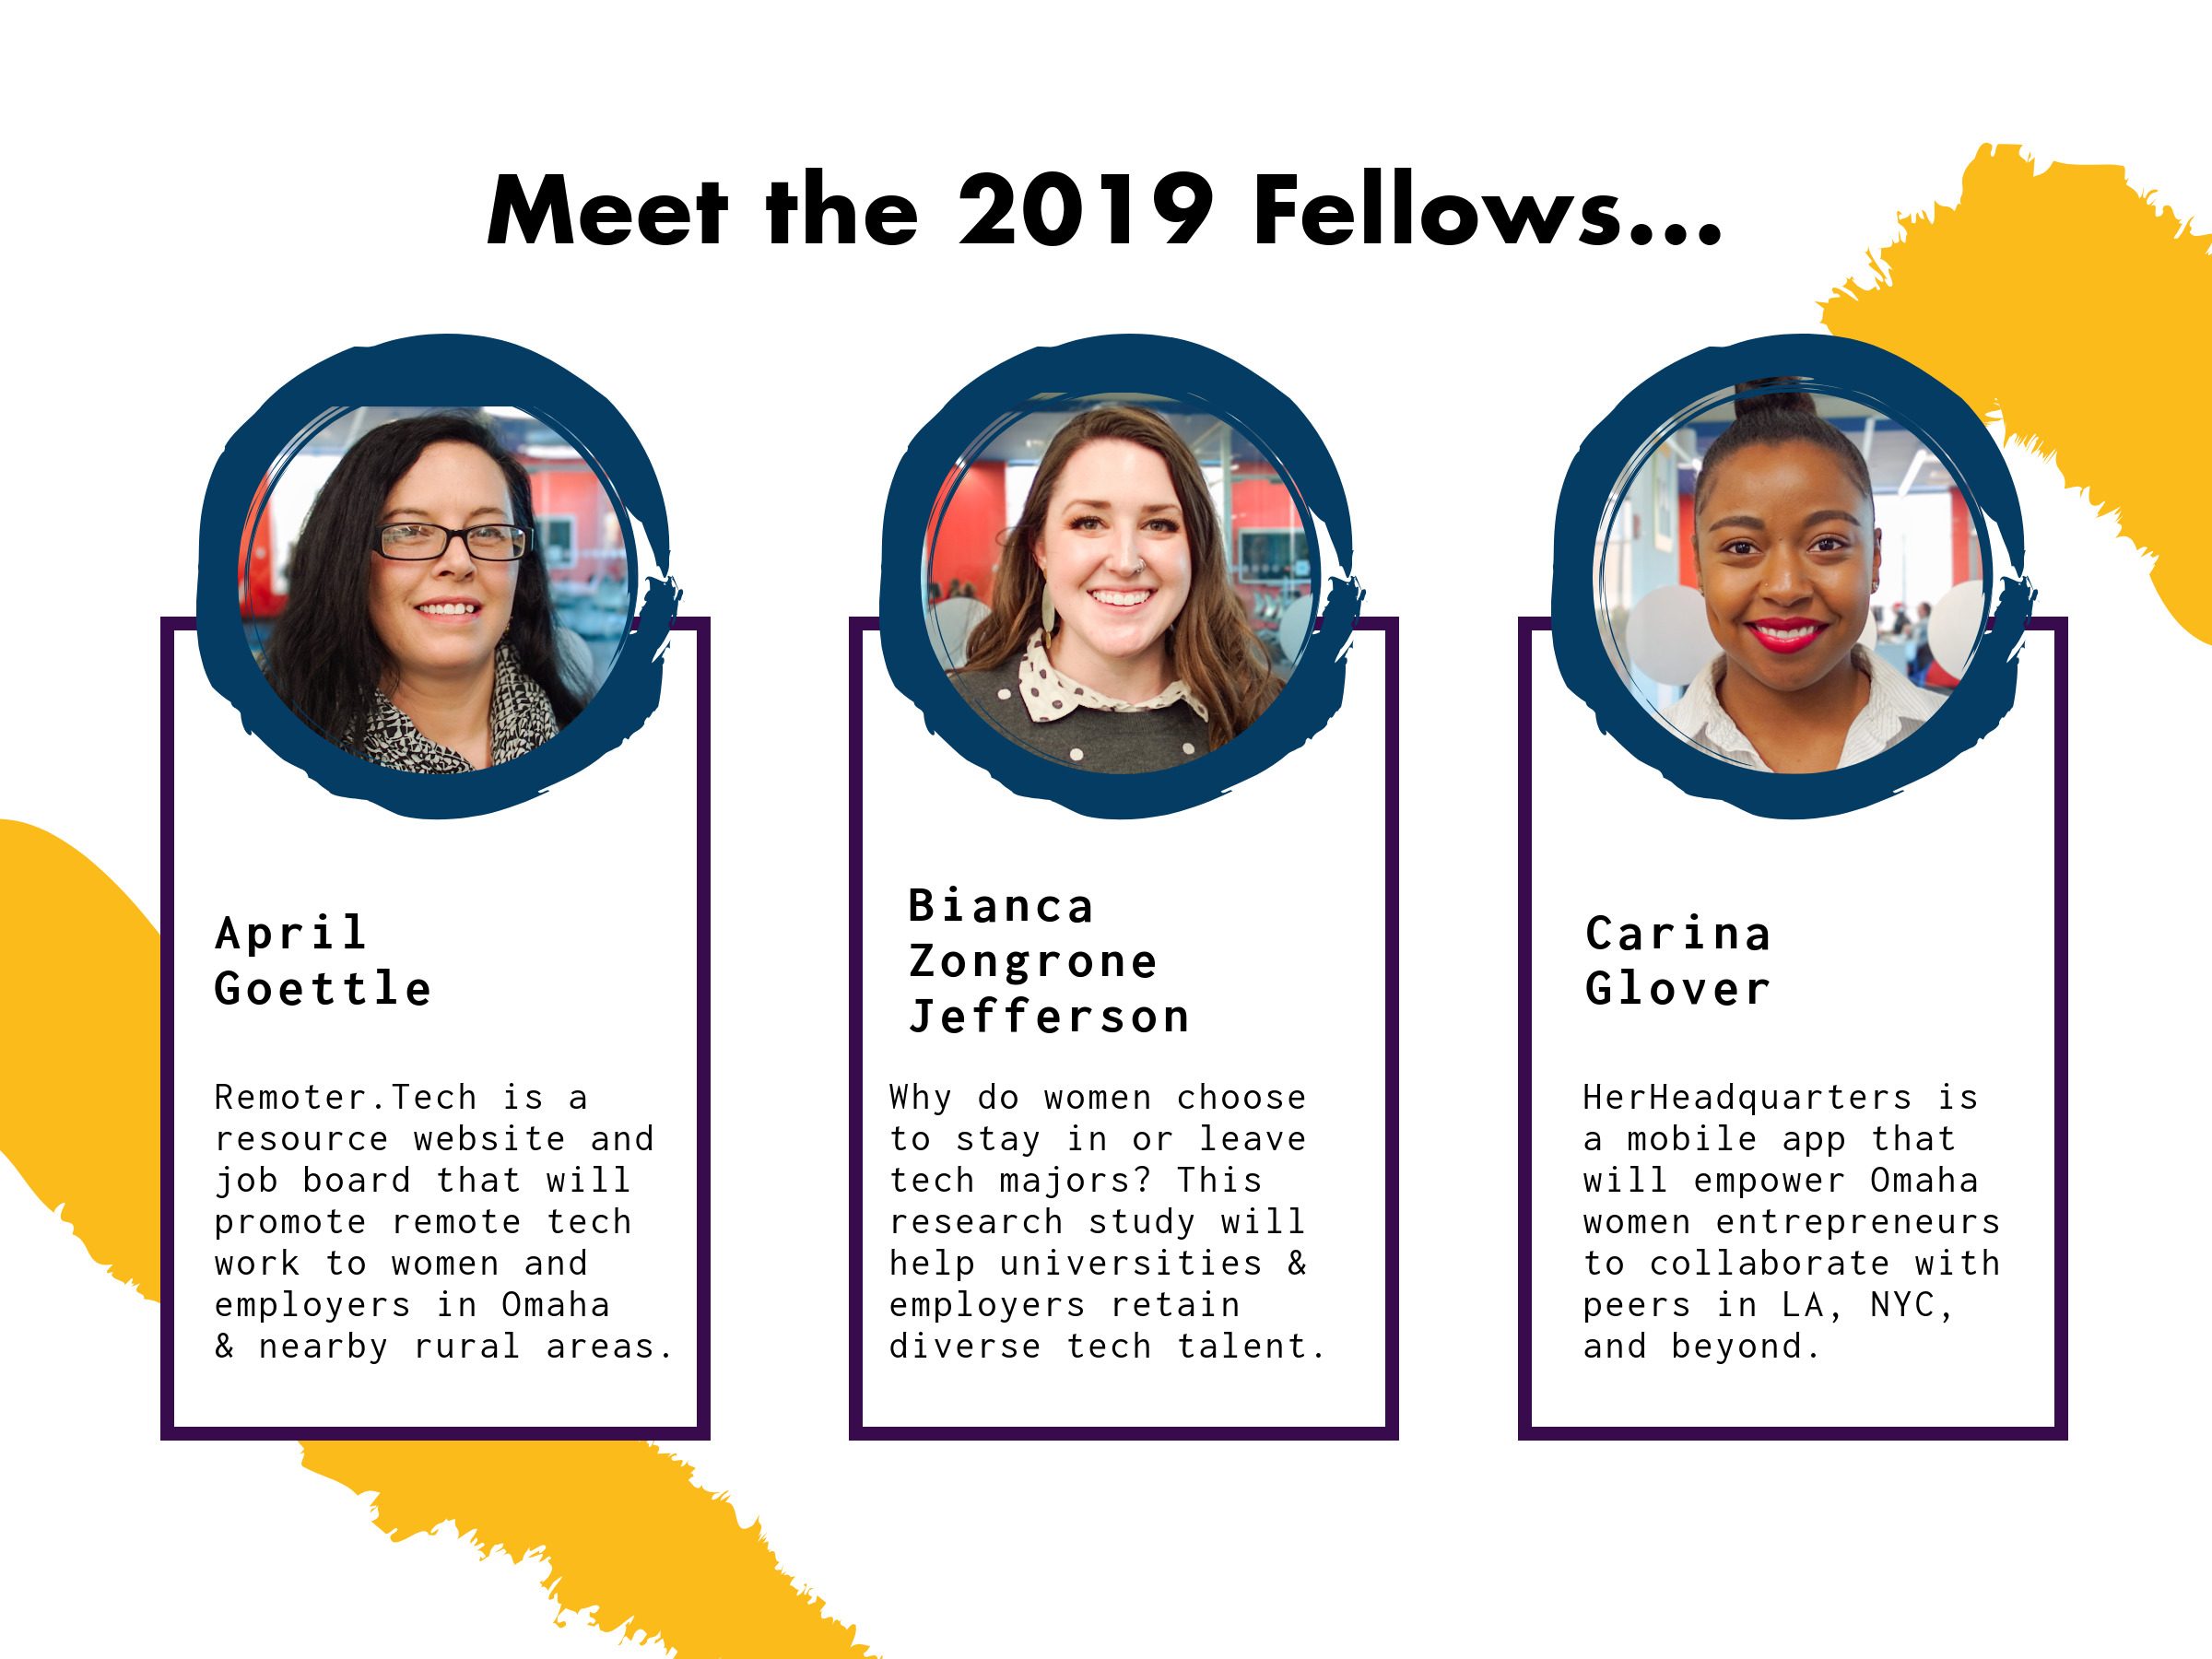 Meet the 2019 Fellows